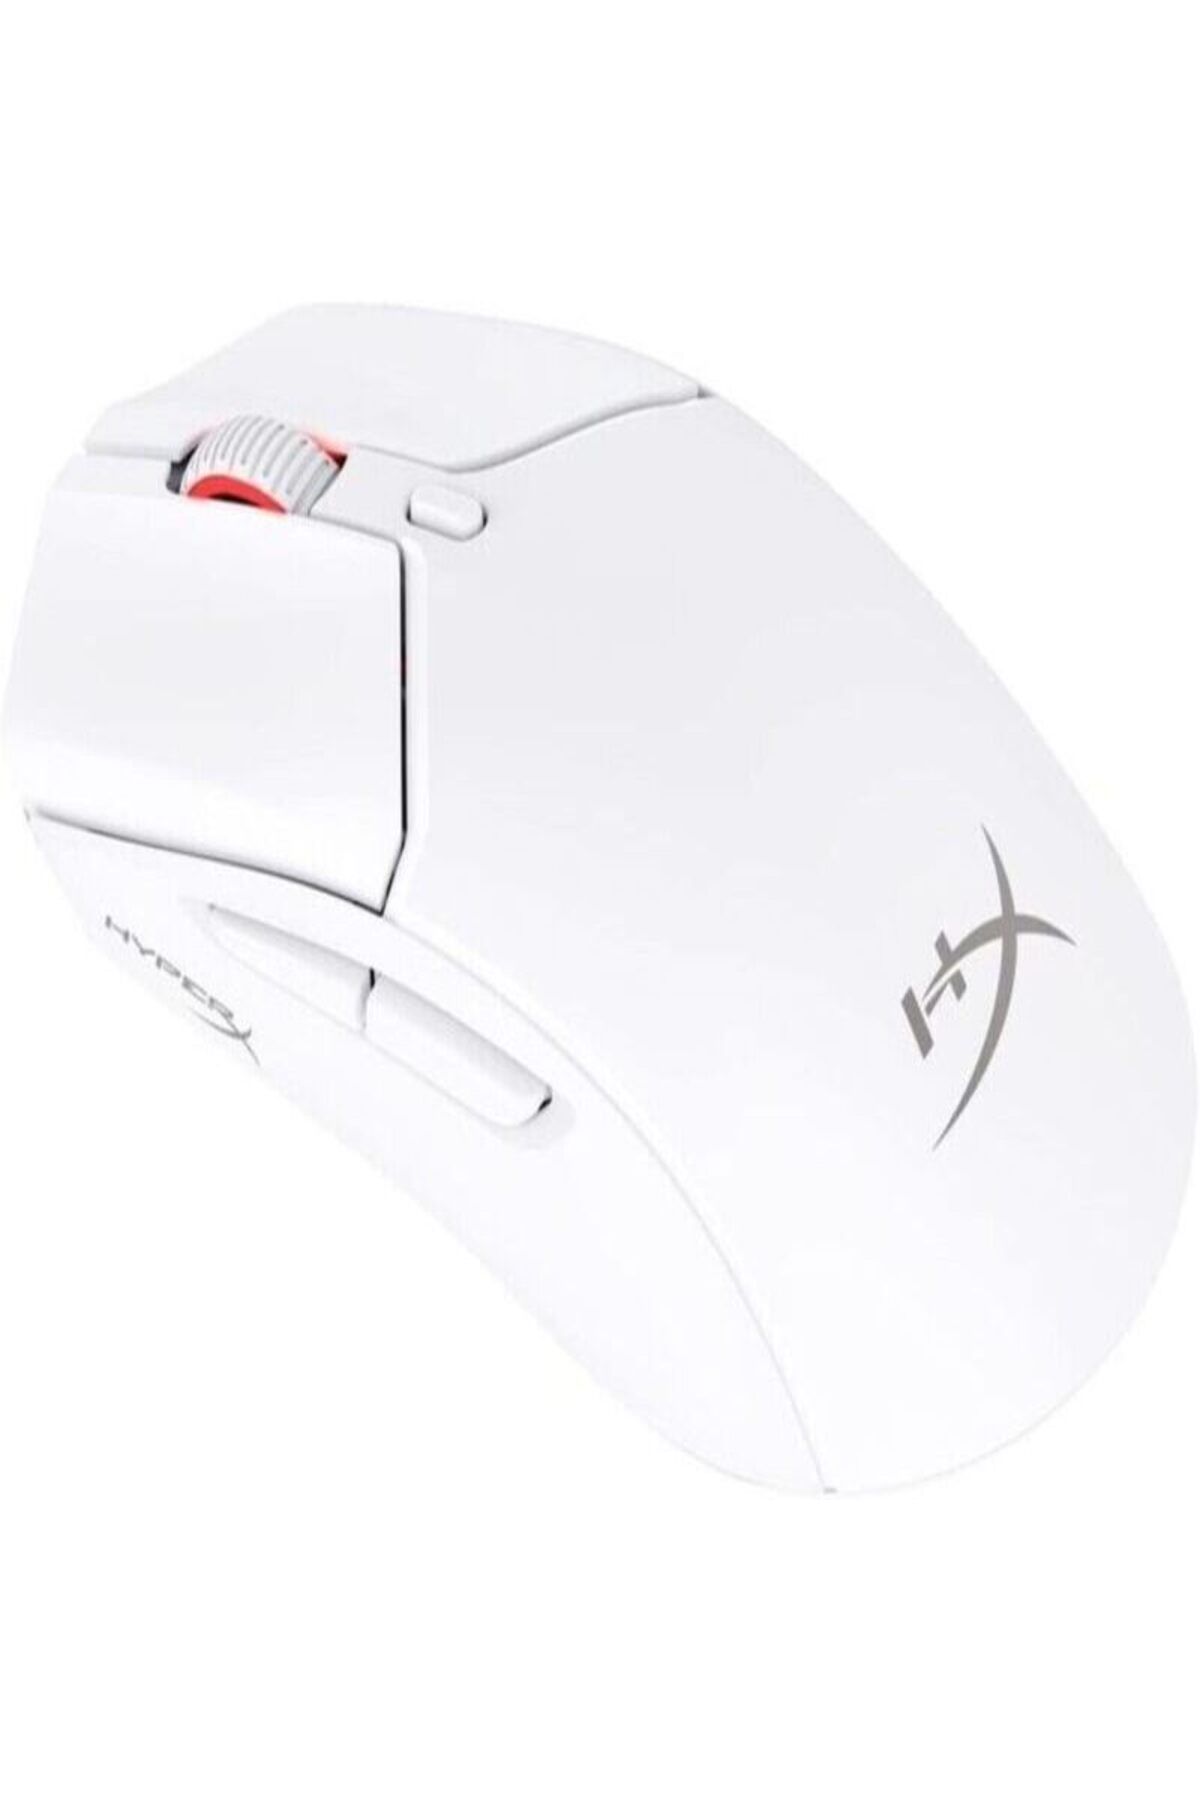 HyperX Pulsefire Haste 2 Beyaz Mouse